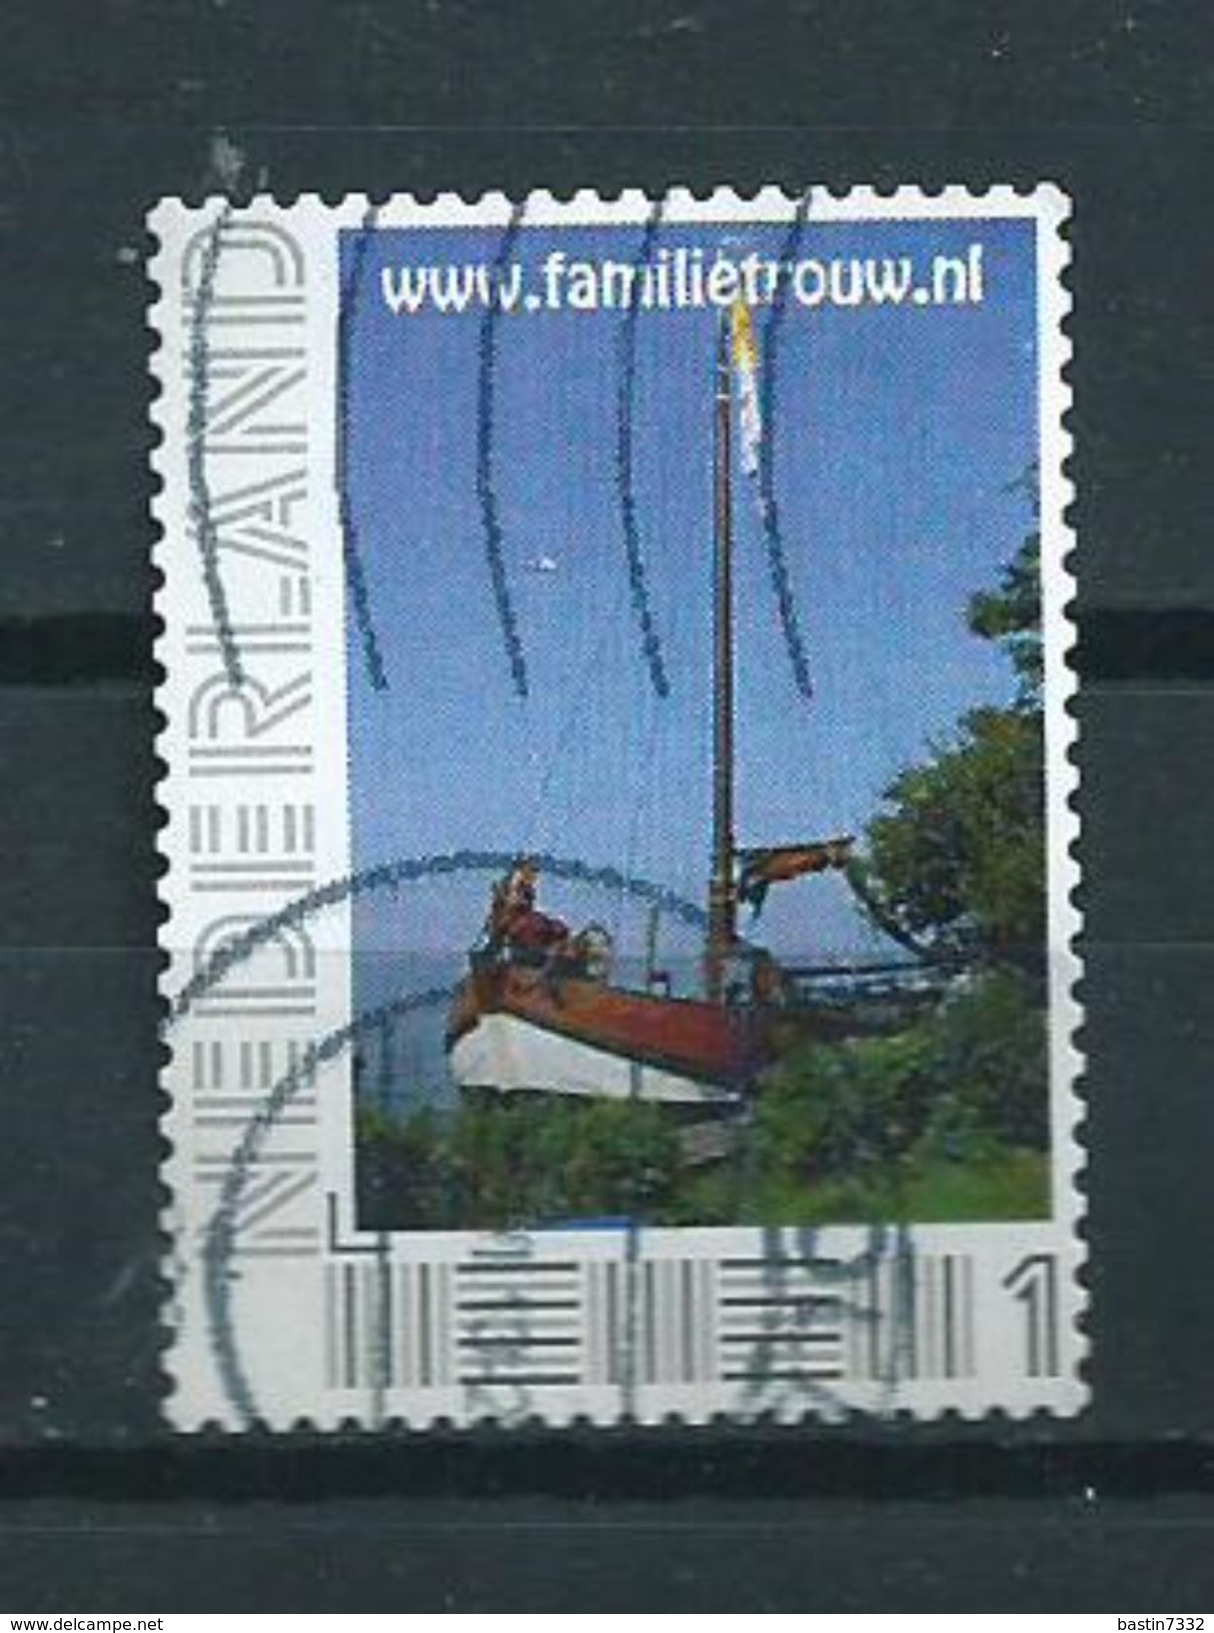 Netherlands Familietrouw.nl Used/gebruikt/oblitere - Personalisierte Briefmarken